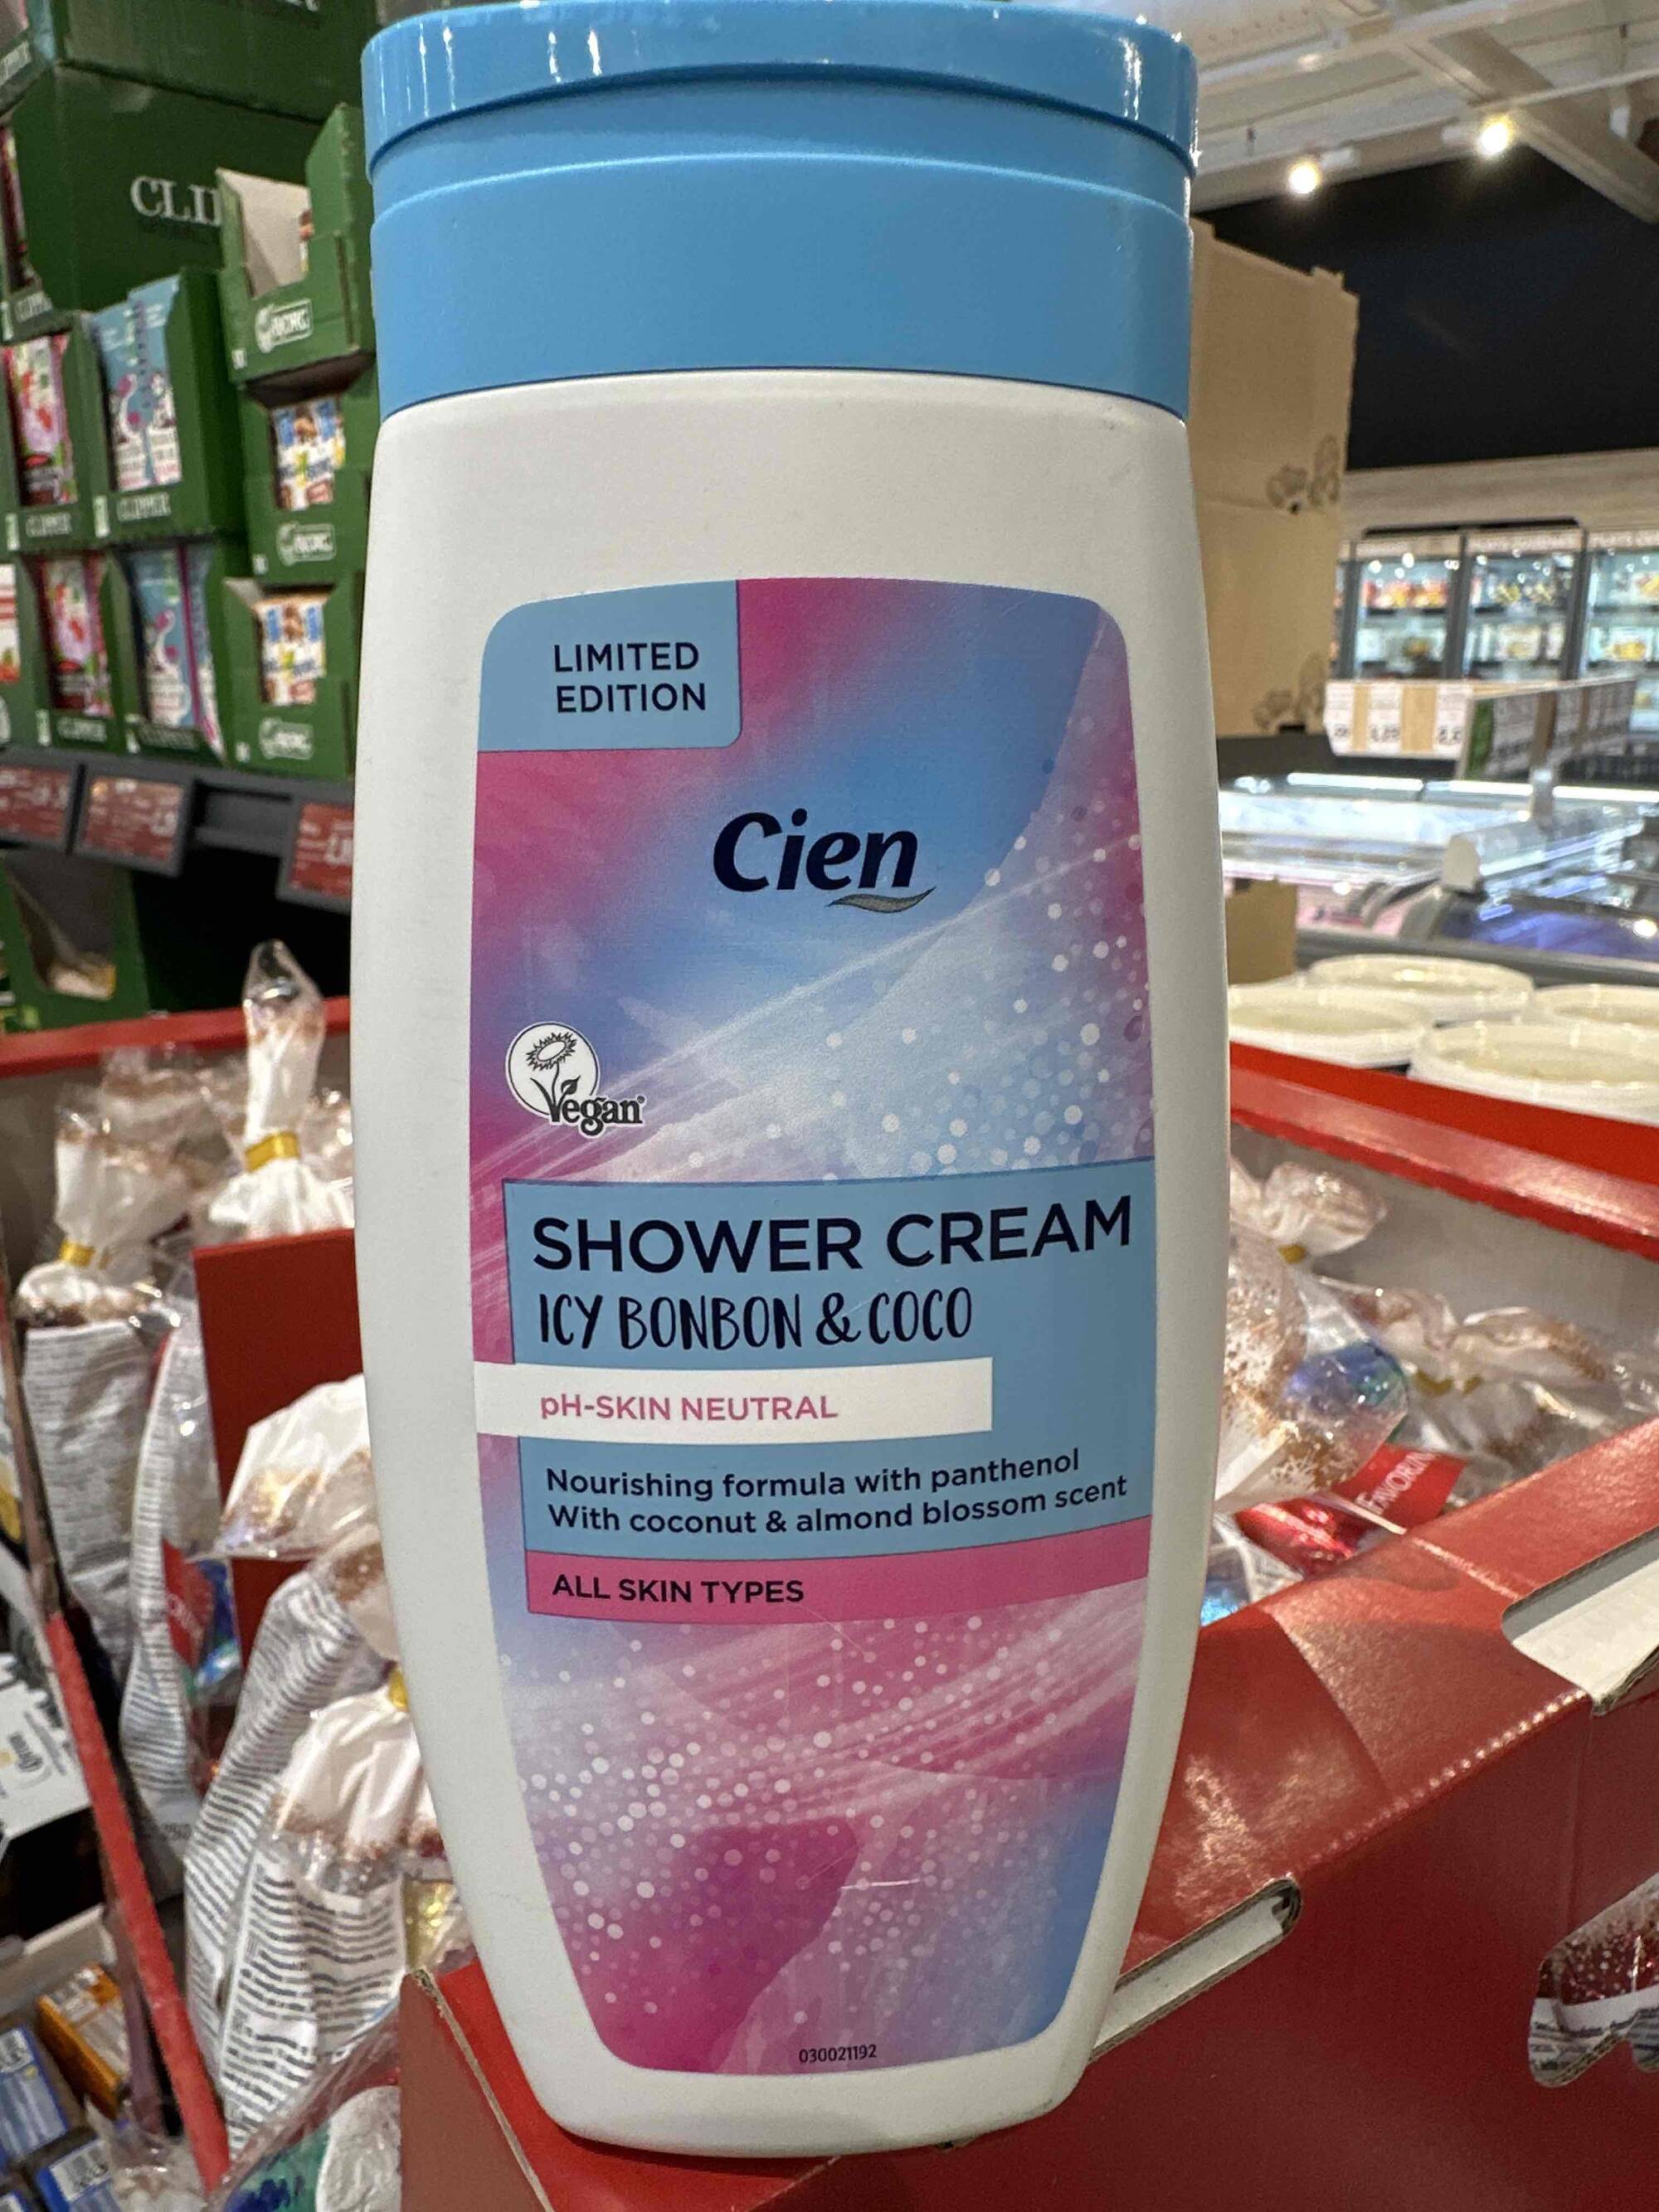 CIEN - Icy bonbon & coco - Shower cream